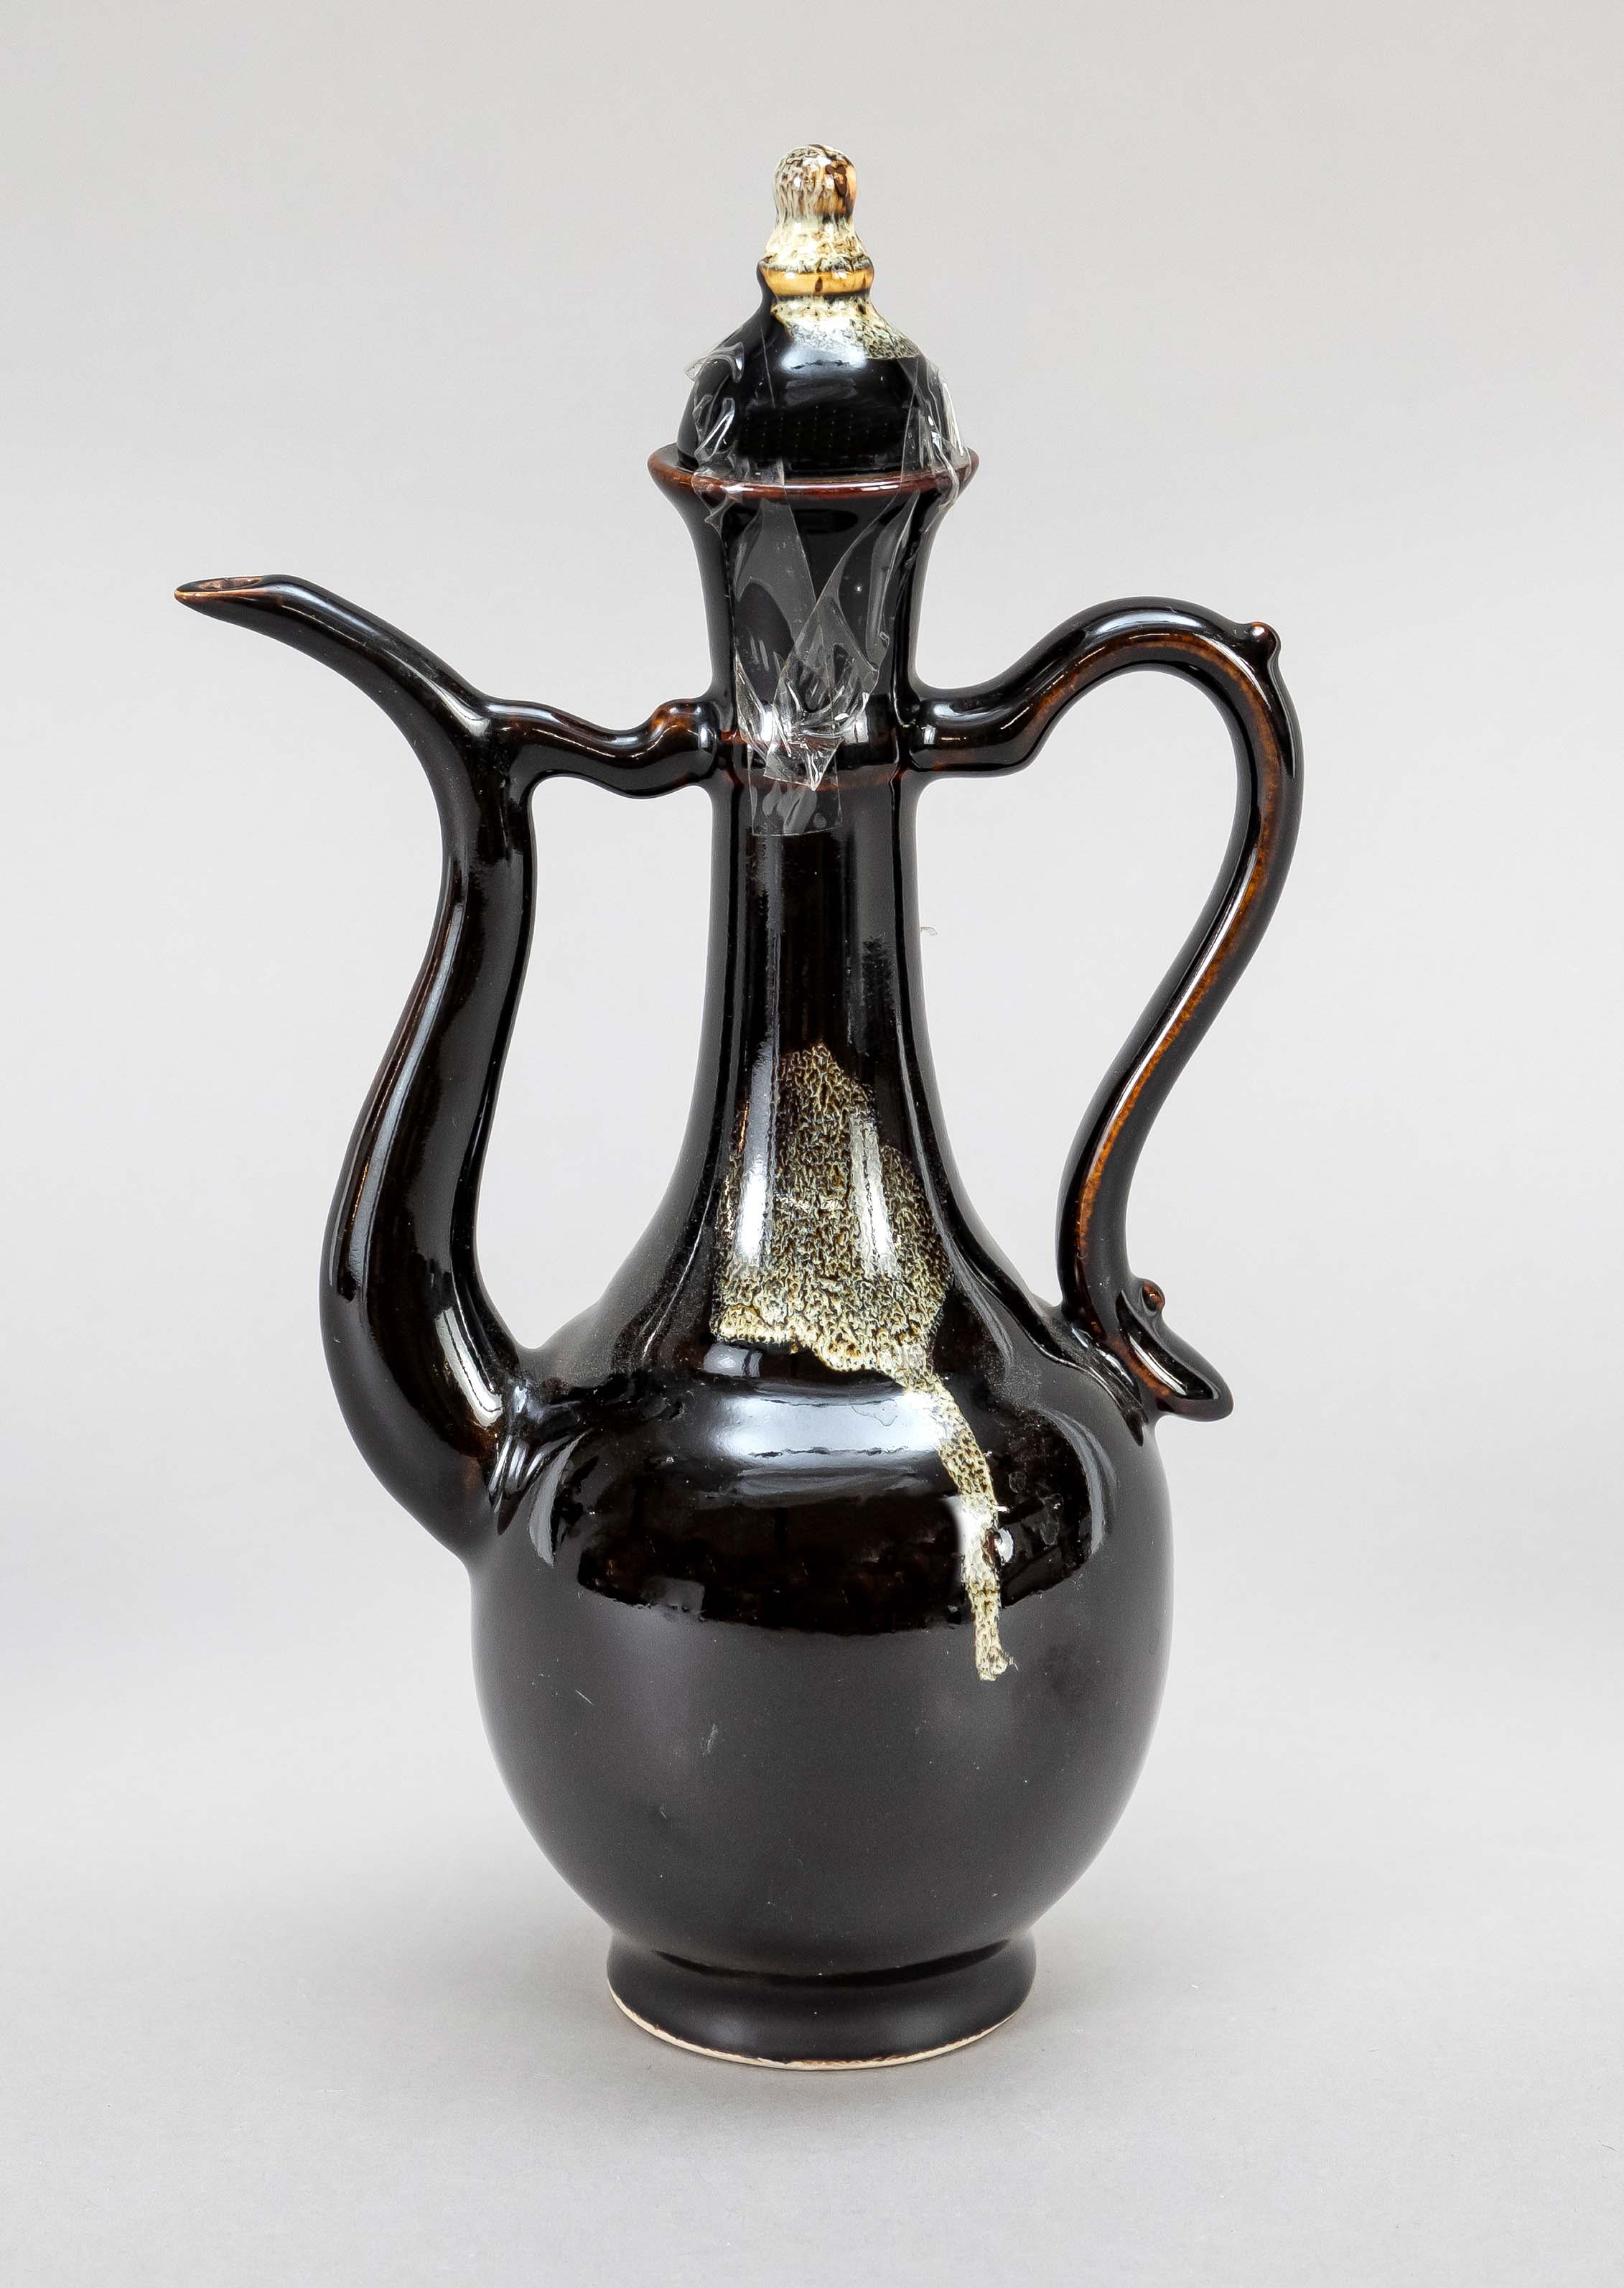 Art Nouveau jug, 1910-20s, van de Velde style glaze, shape based on Persian metal jugs, h. 24 cm